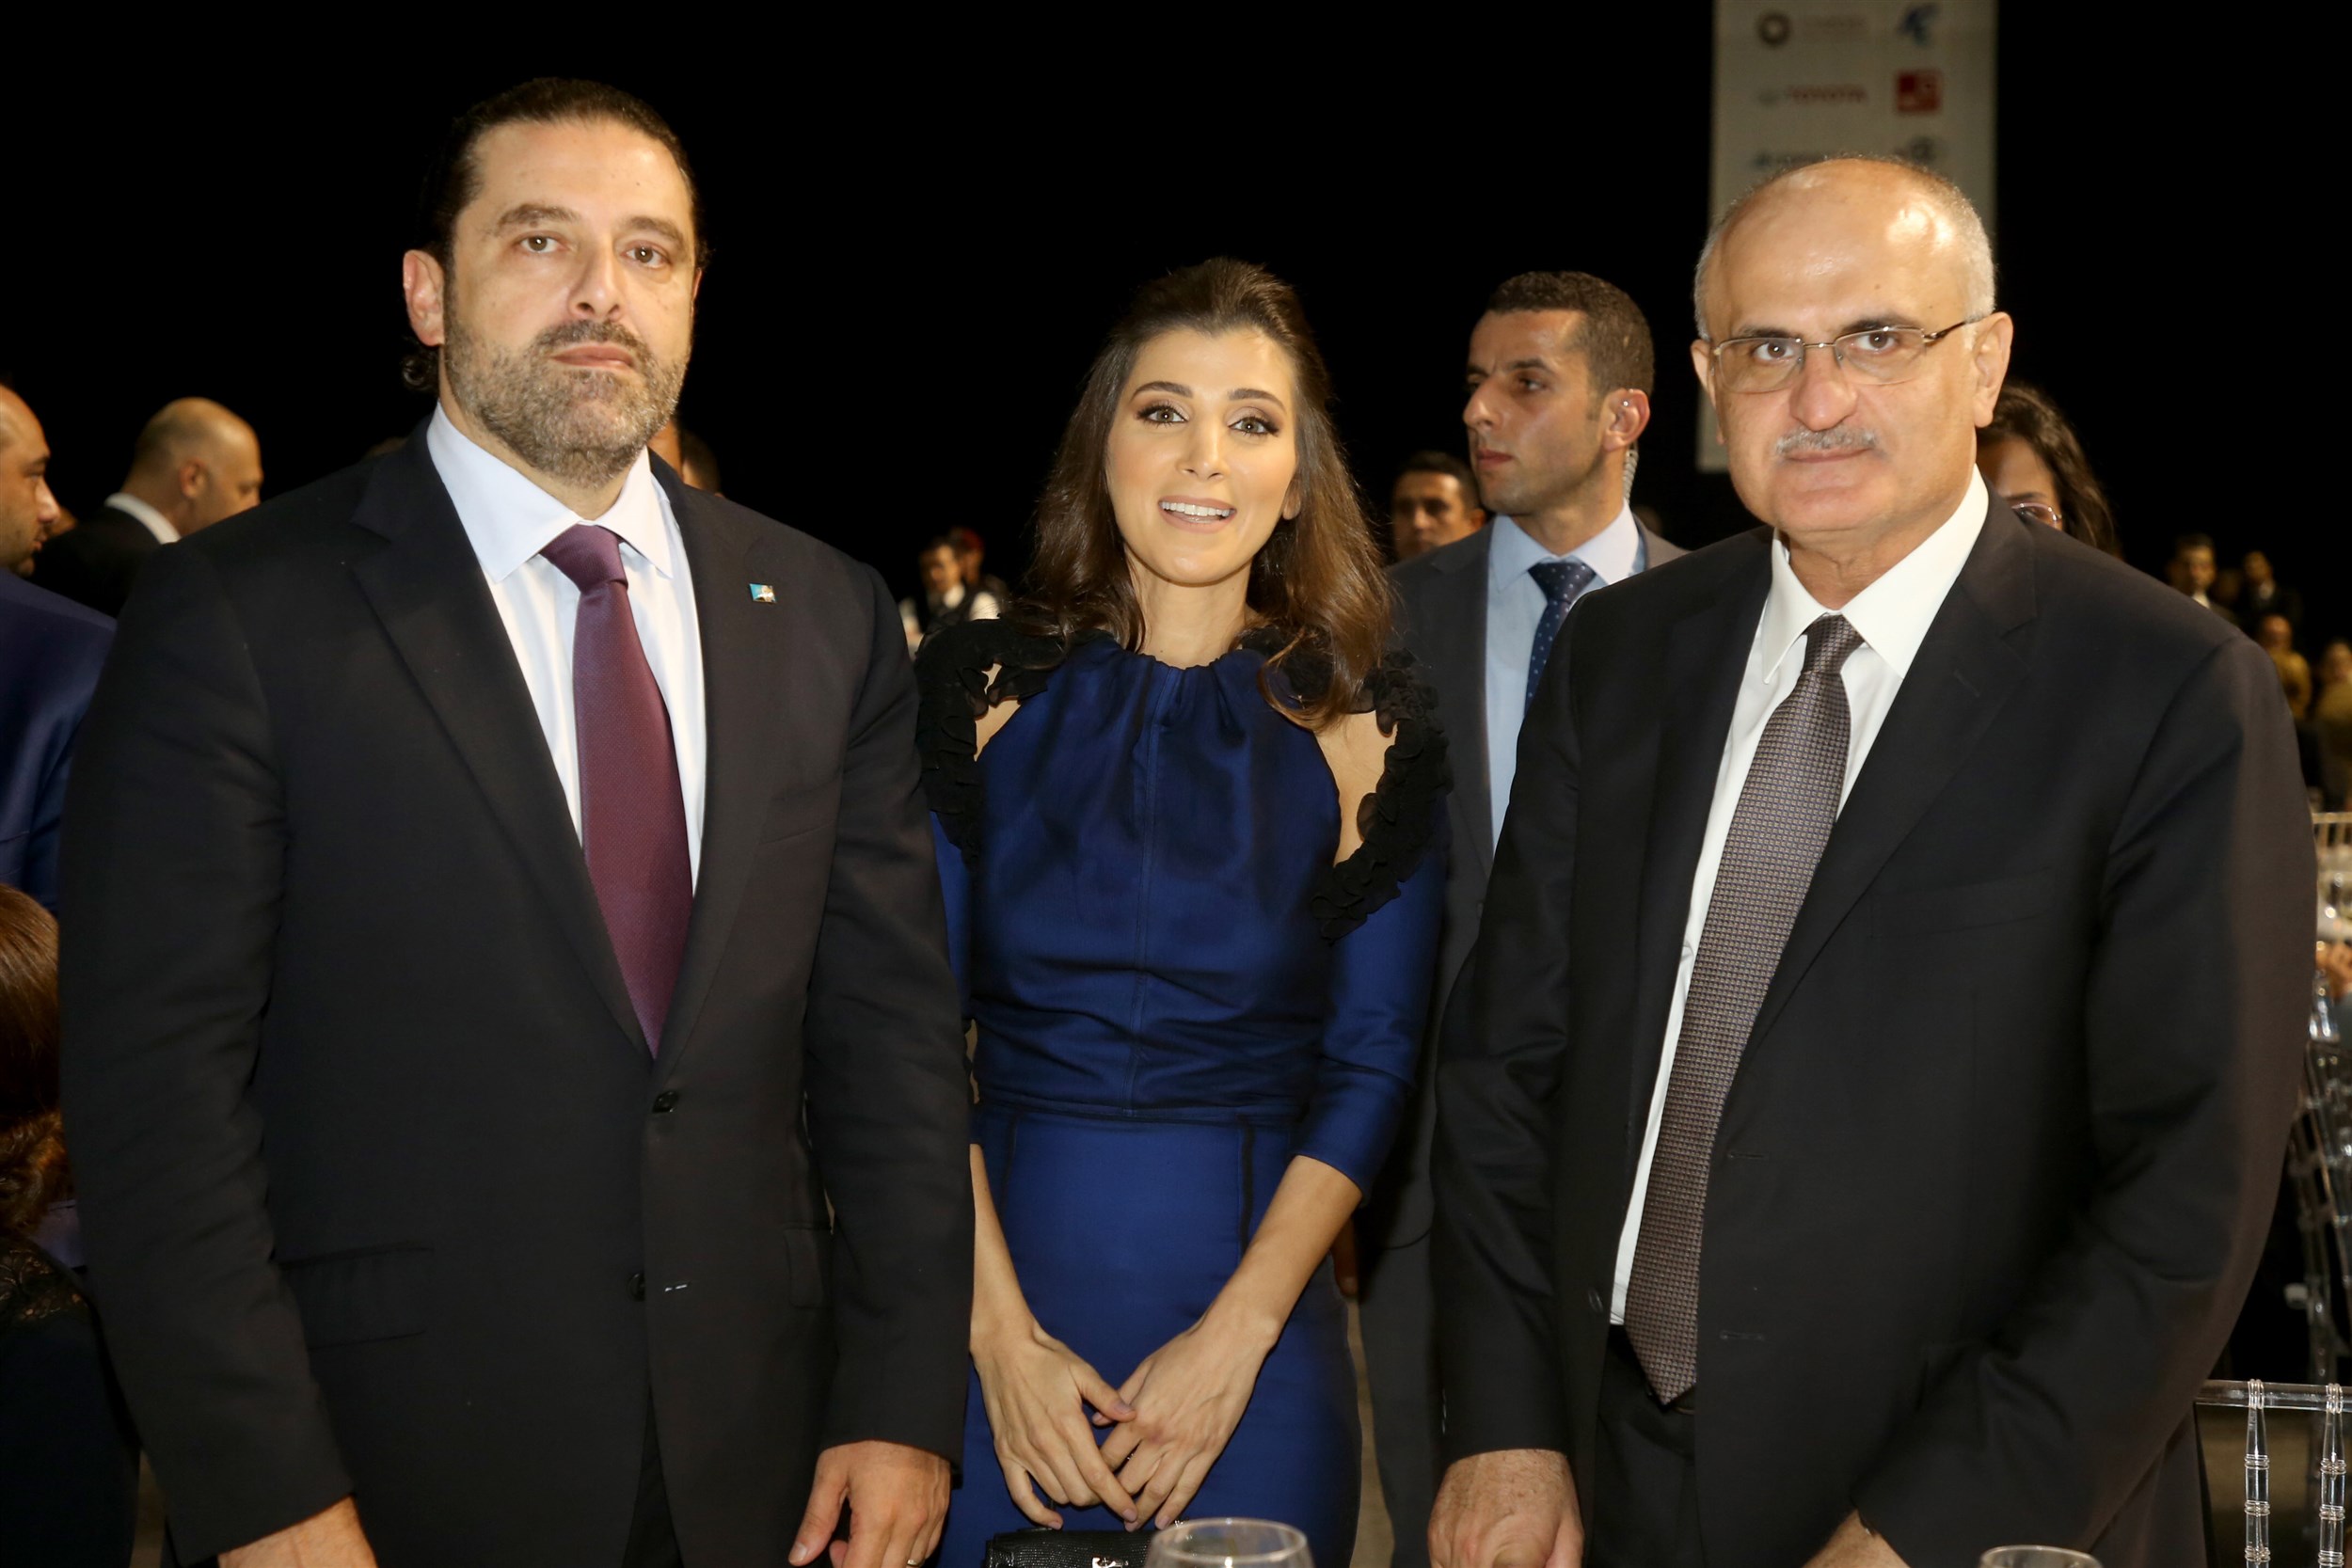 iaaf president with he pm saad hariri and he minister of finance mr. ali hassan khalil in lne gala dinner 